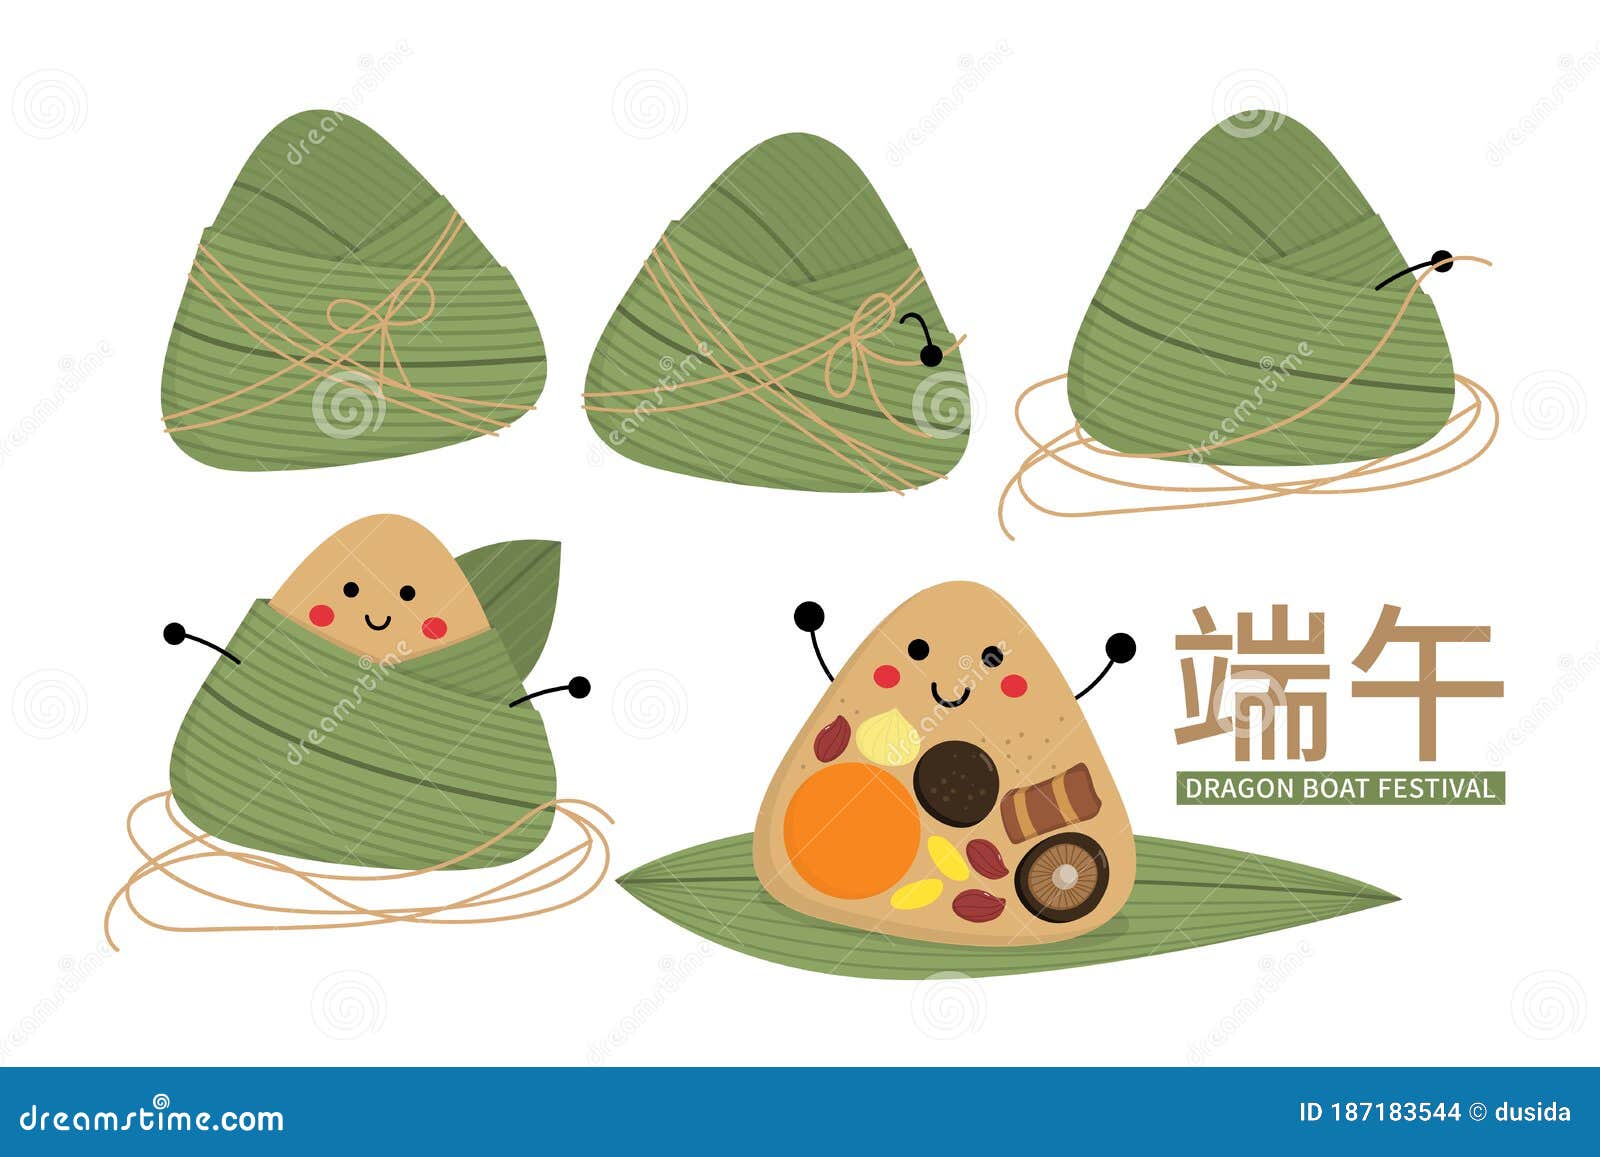 happy dragon boat festival with cute rice dumpling character. translate: dragon boat festival. -